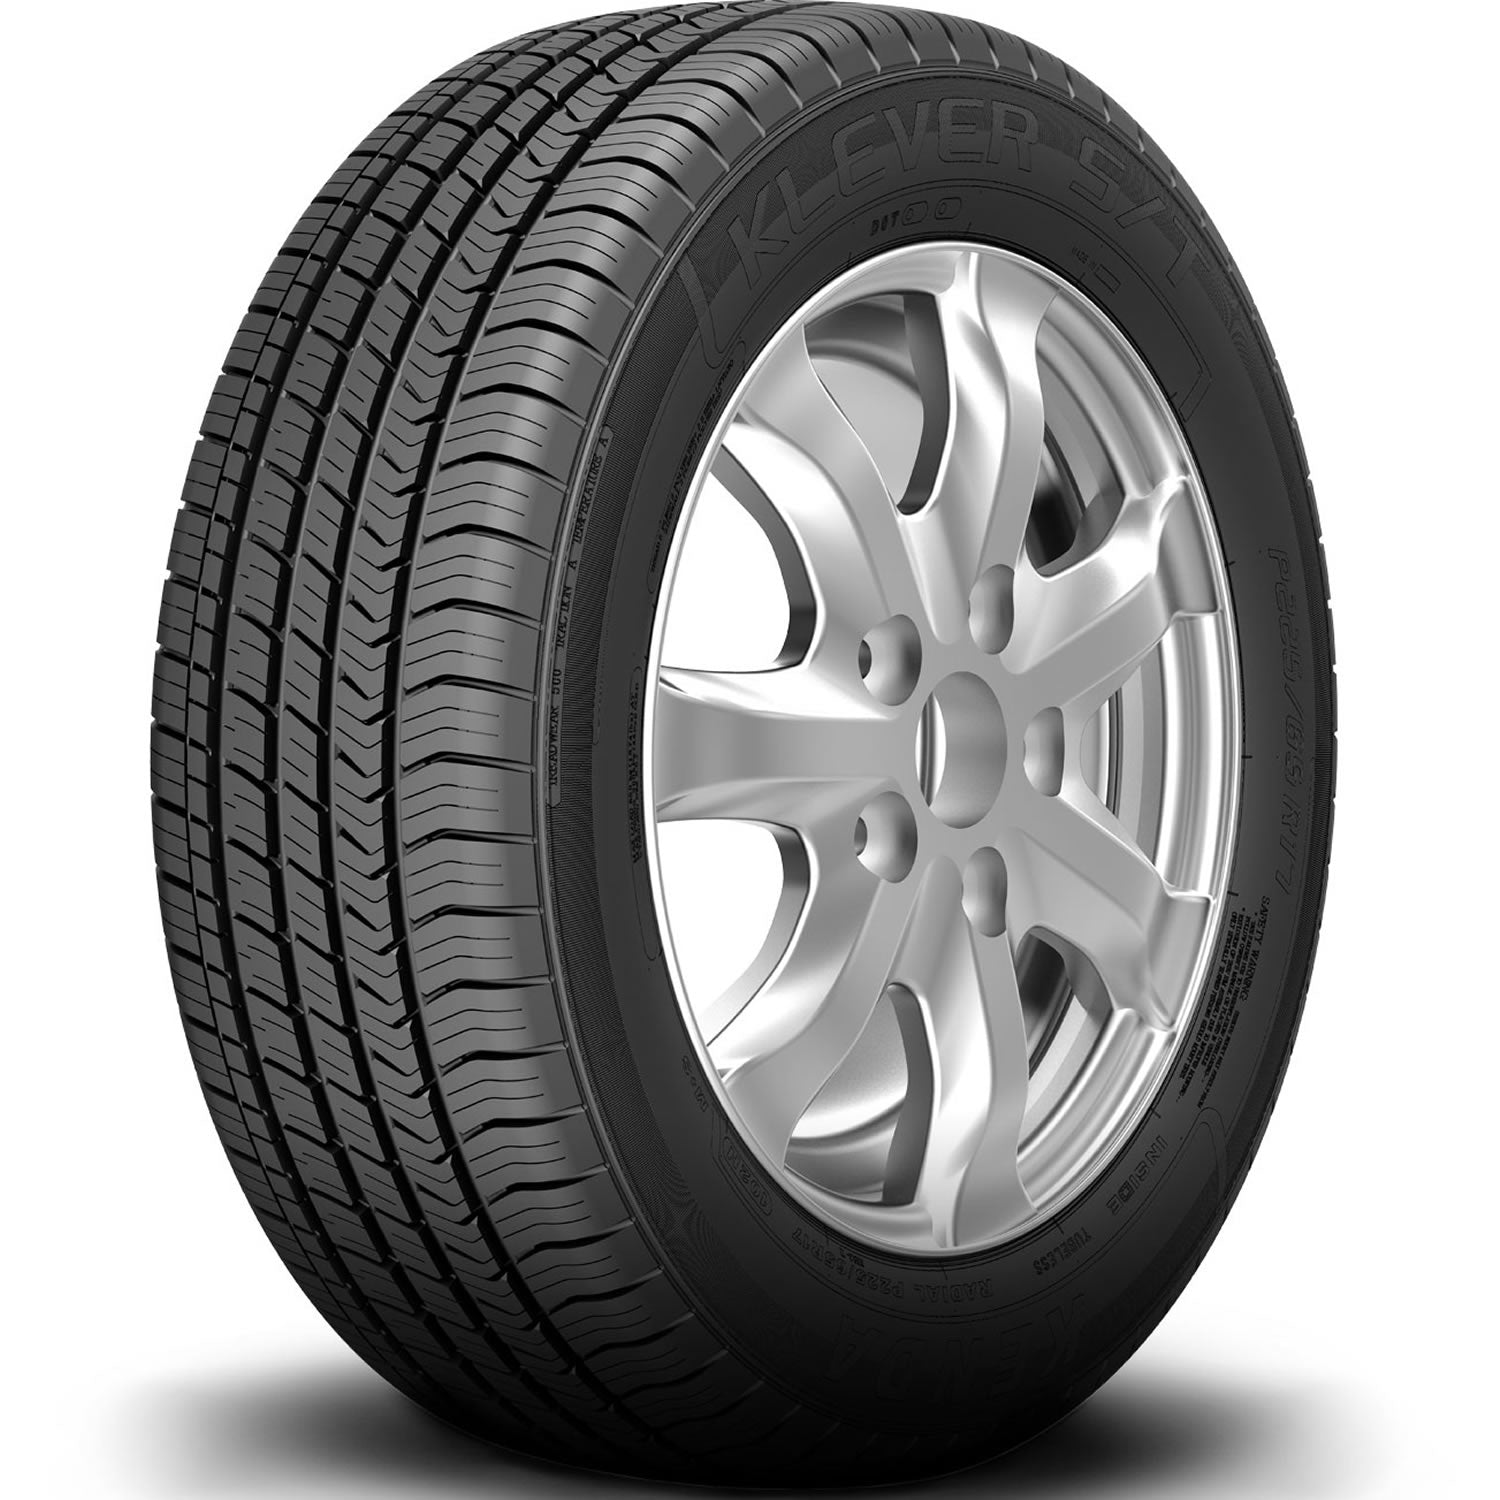 KENDA KLEVER ST 215/70R16 (27.9X8.8R 16) Tires